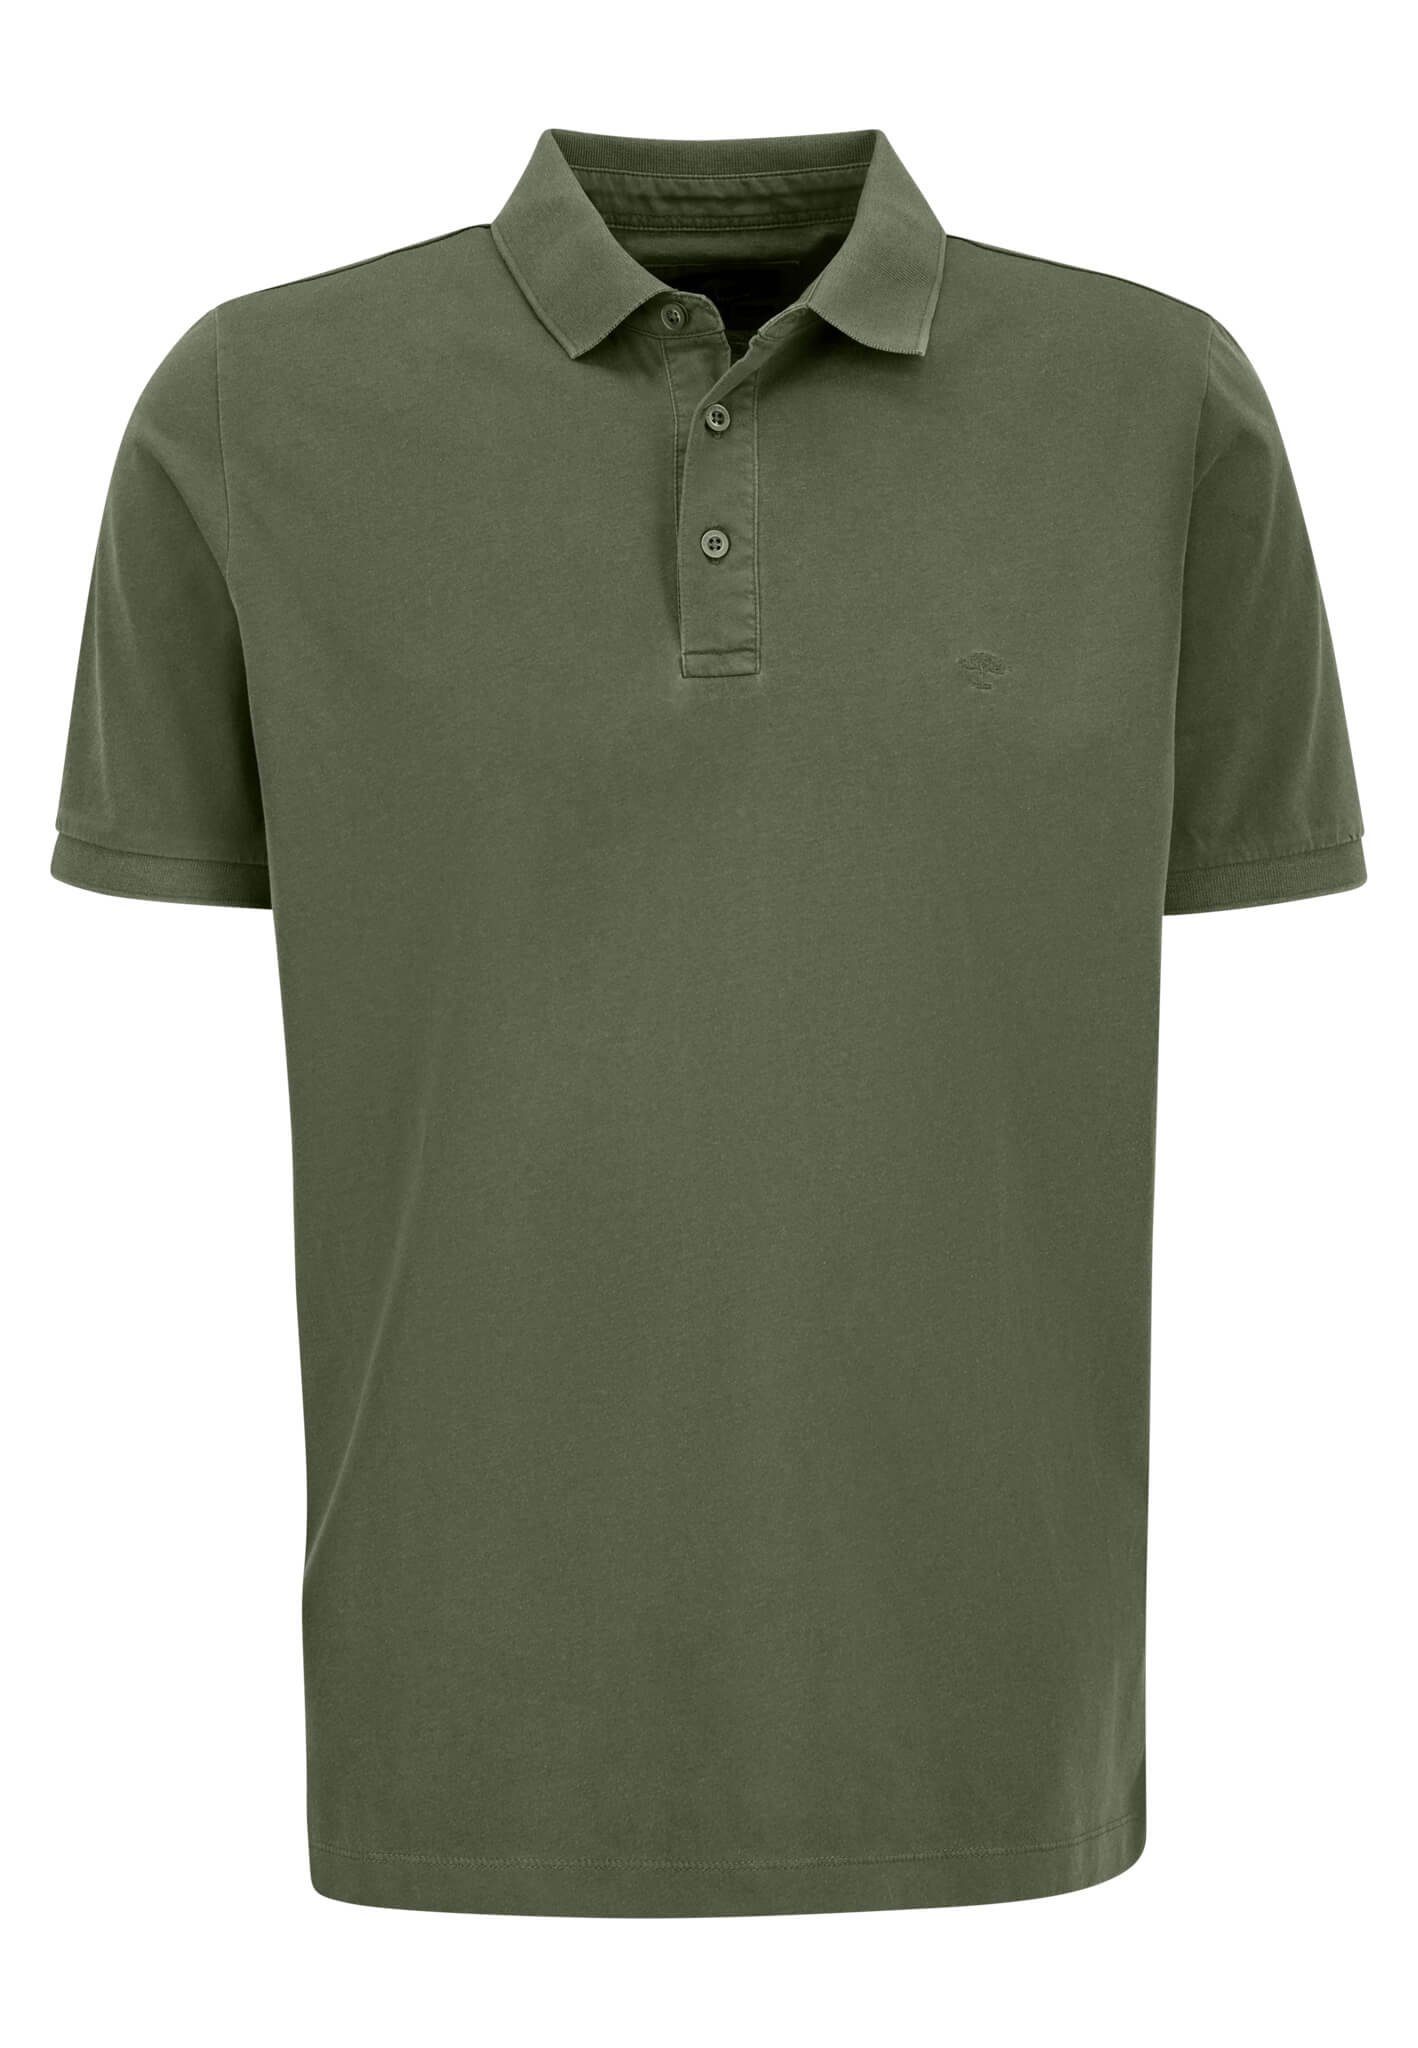 Mercerized olive Polo, FYNCH-HATTON Dyed, Garment Poloshirt dusty